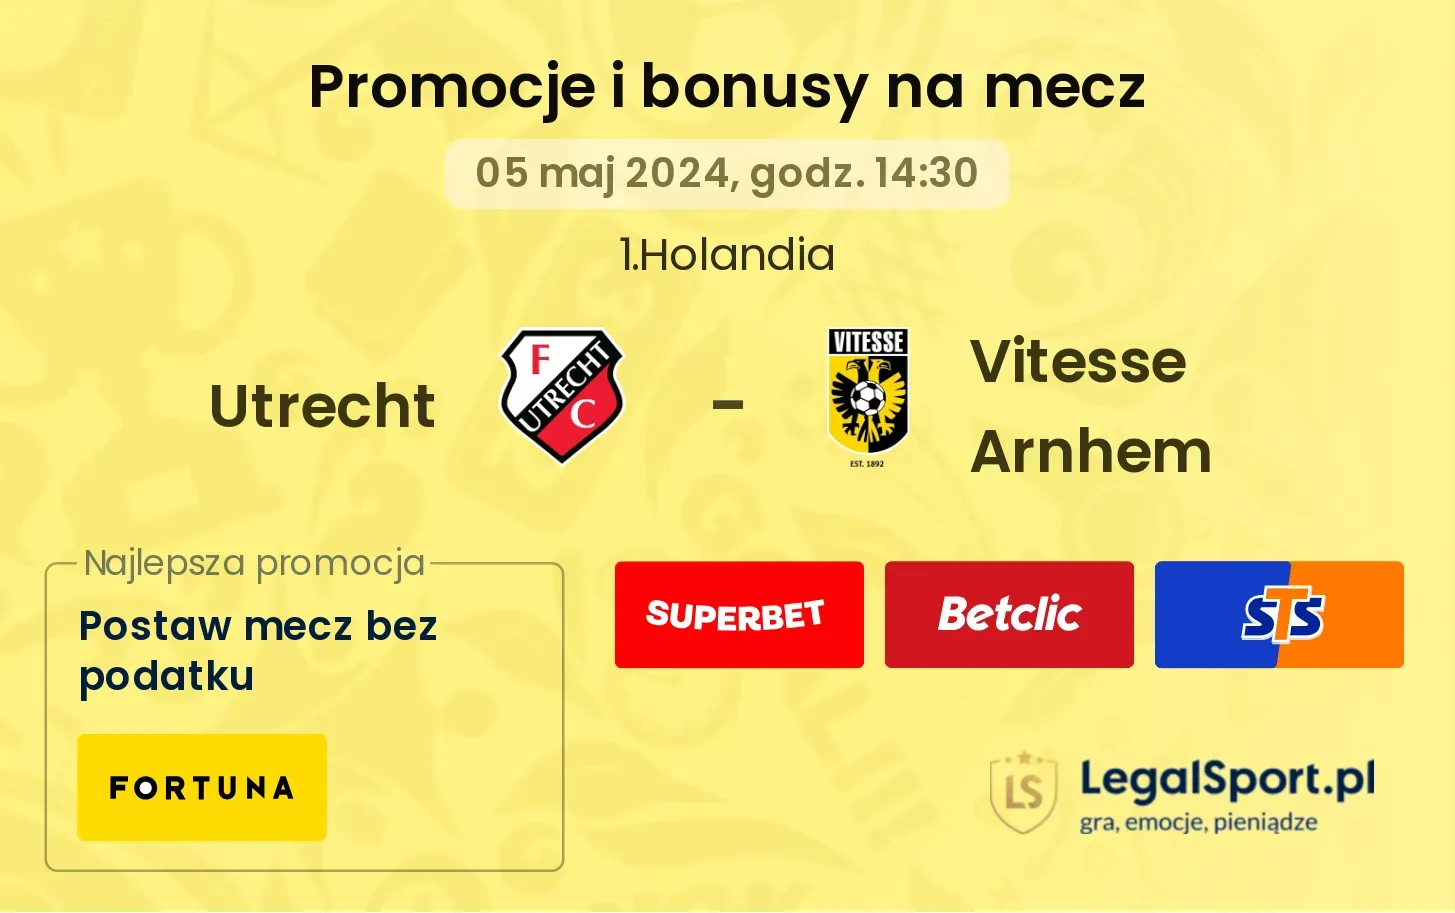 Utrecht - Vitesse Arnhem promocje bonusy na mecz